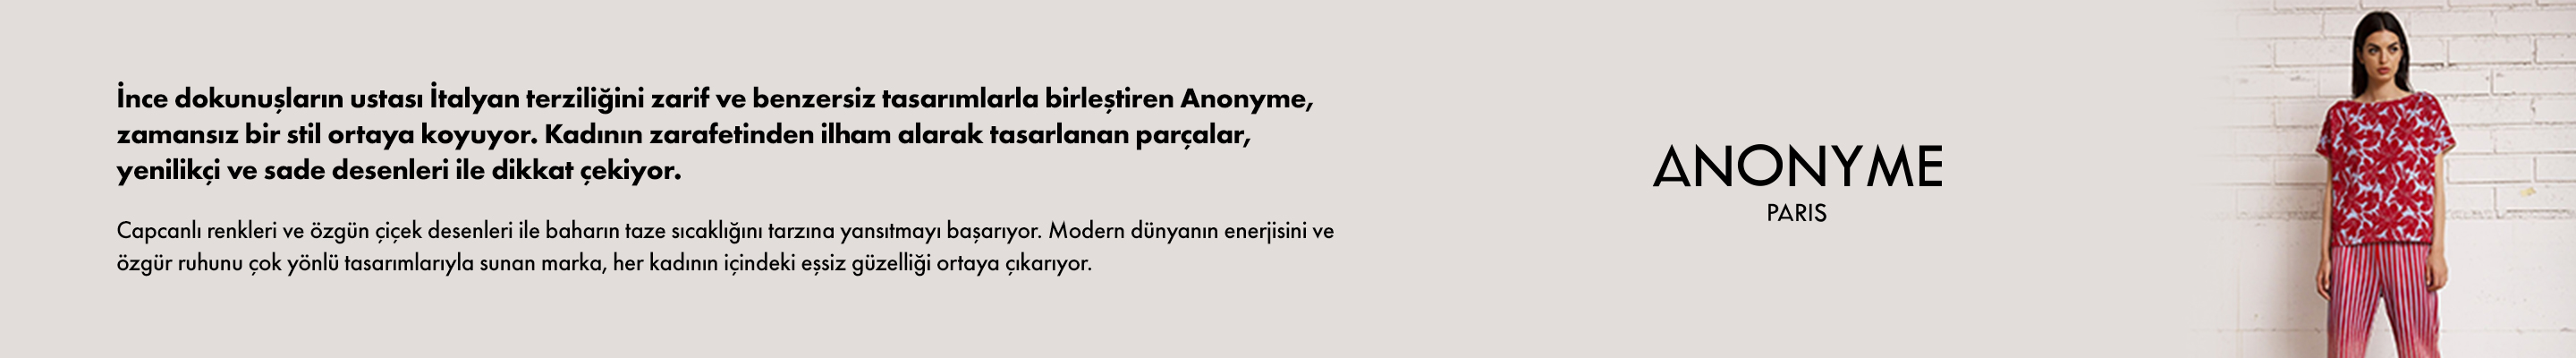 Anonymo